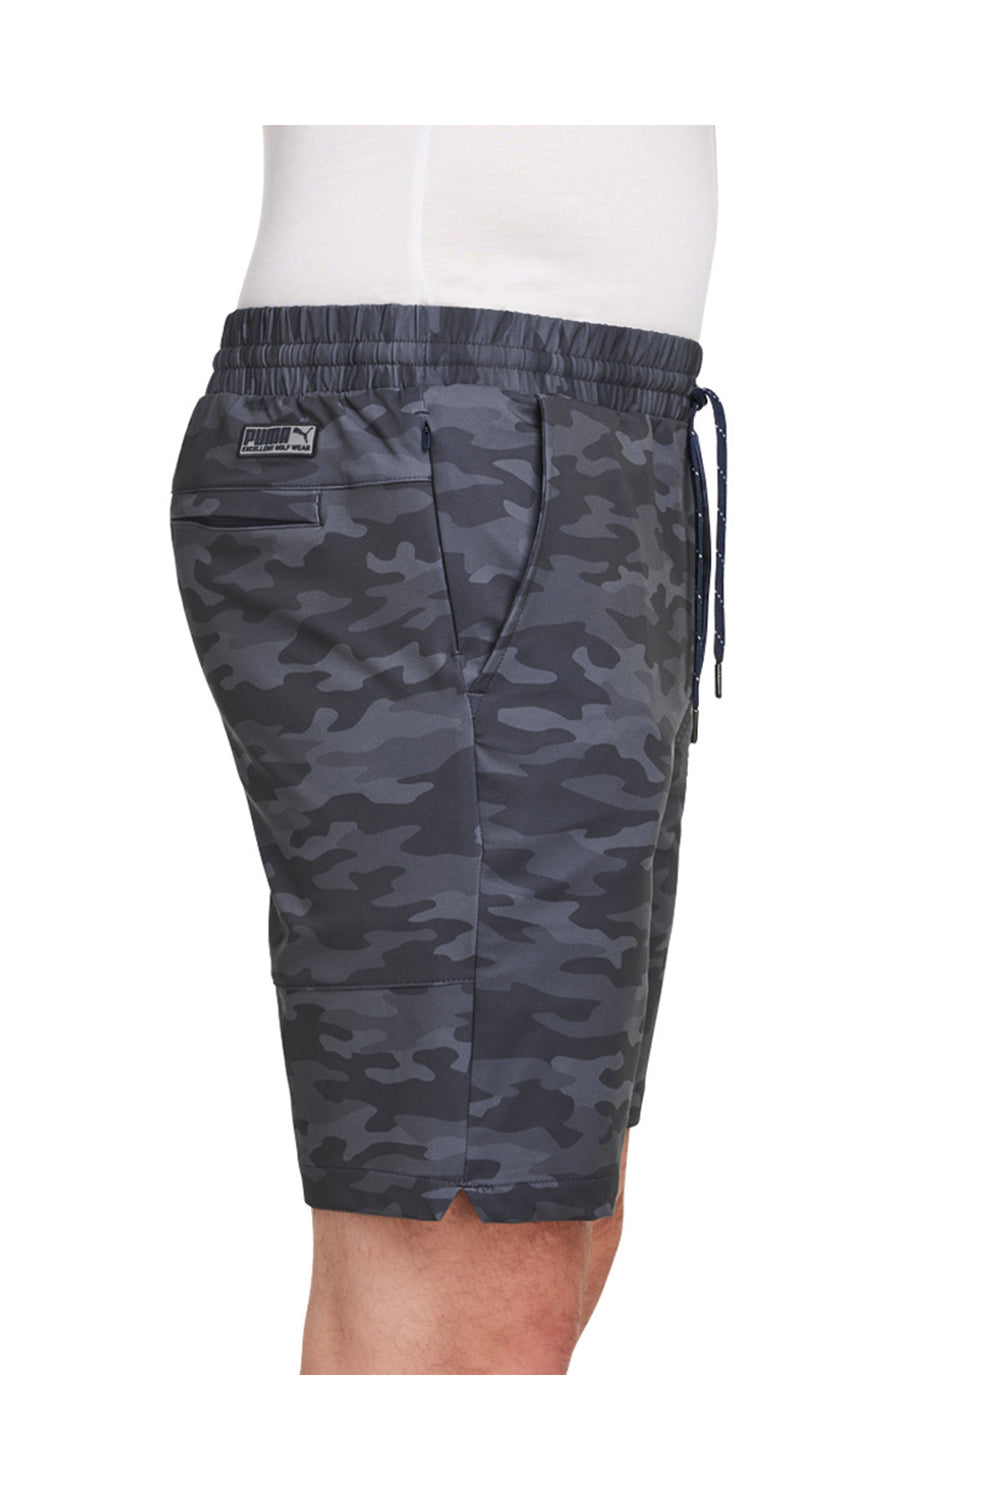 Puma 599271 Mens EGW Walker Shorts w/ Pockets Navy Blue Camo Side